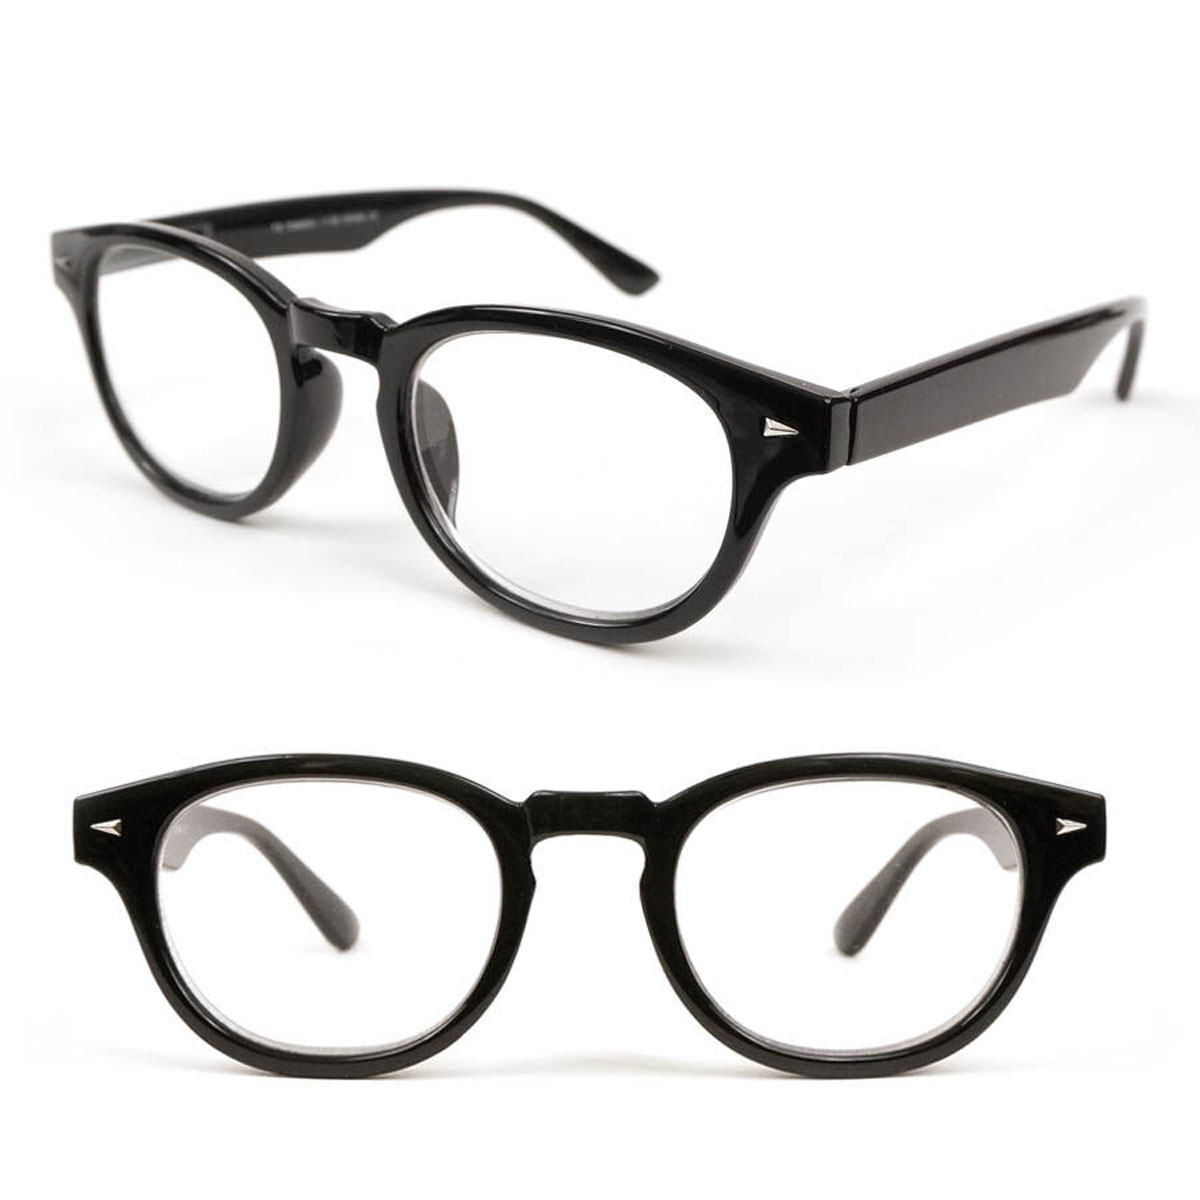 Medium Round Classic Frame Reading Glasses Geek Retro Vintage Style 100-375 - Black, +1.50